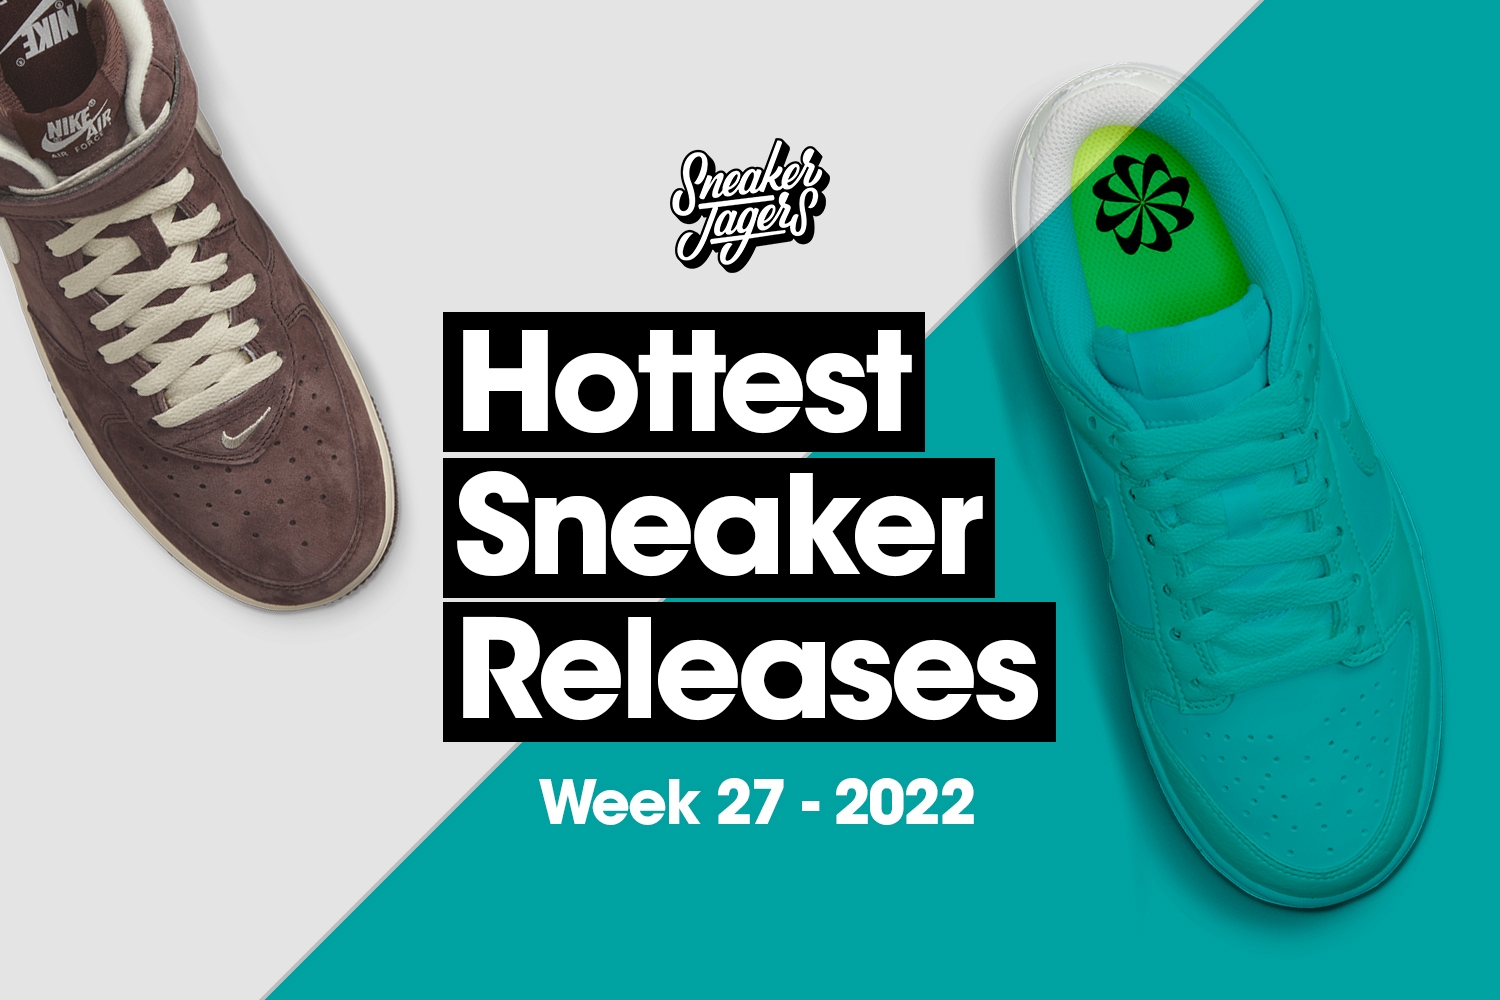 Hottest Sneaker Releases - week 27